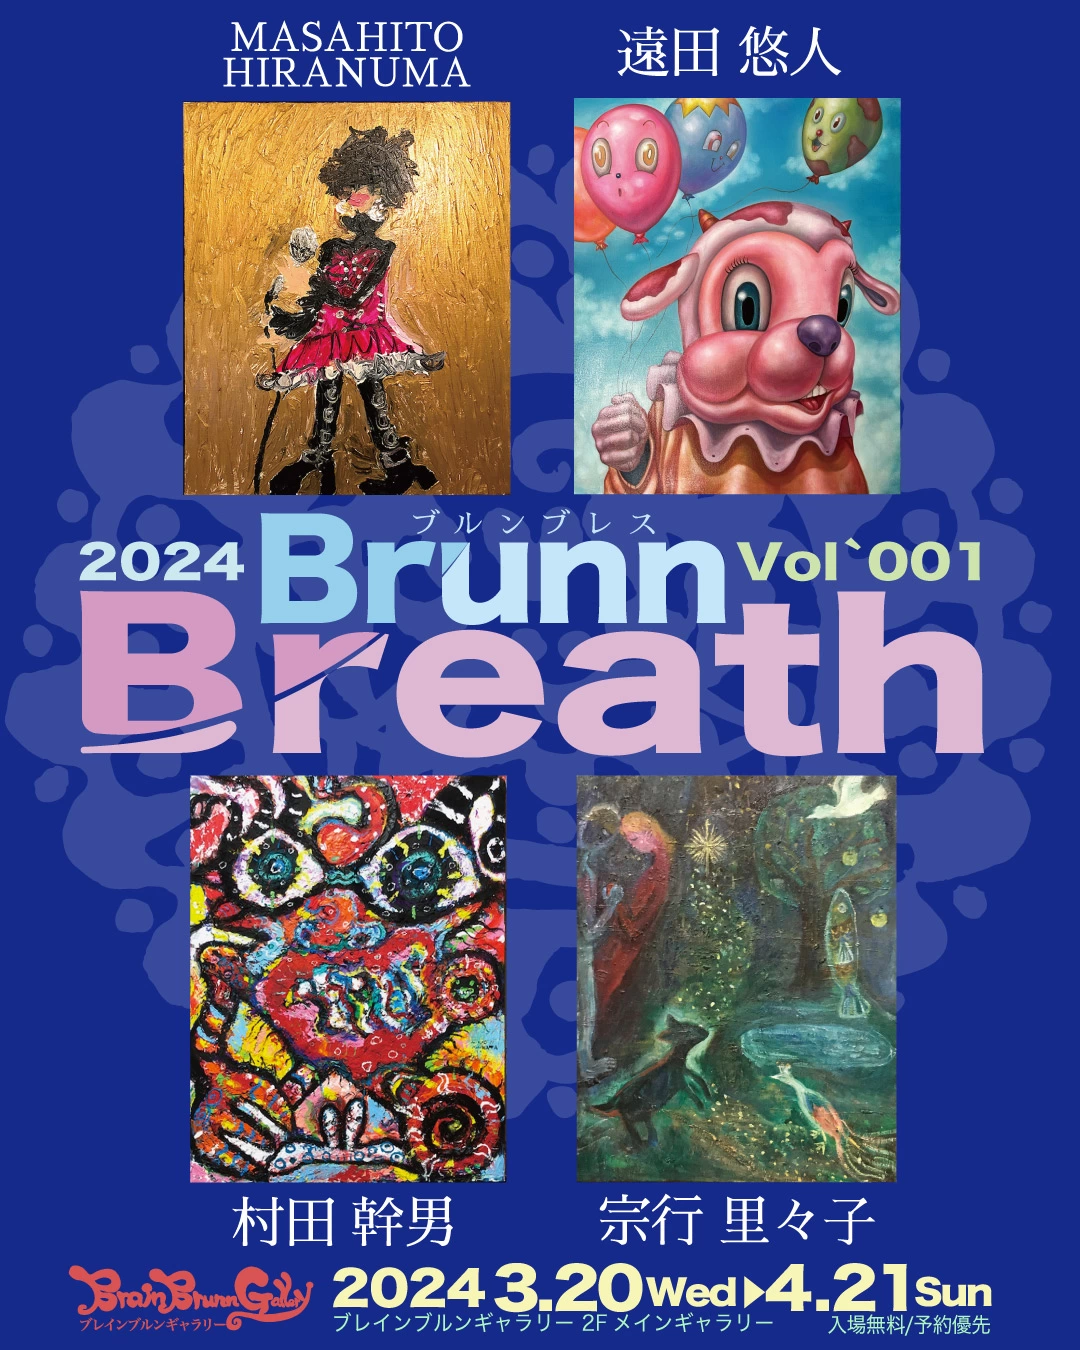 Brunn Breath 2024